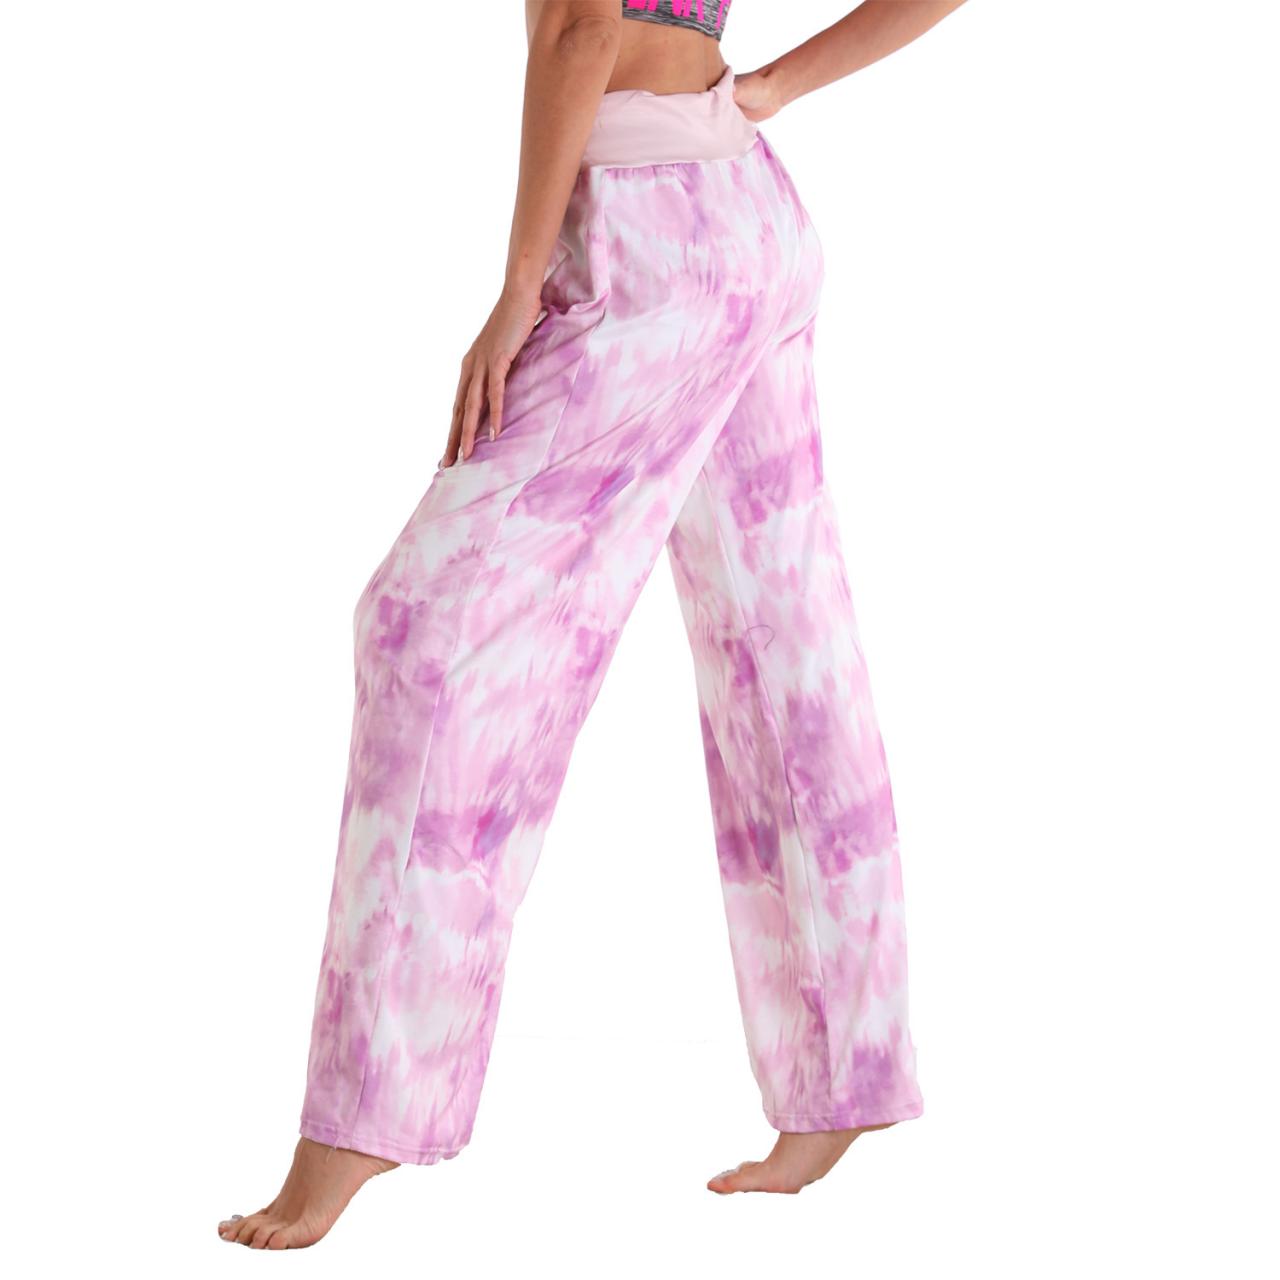 Leisure Sports Yoga Women Casual Pajamas Elastic Pocket Trousers Loose Fit Strap Pink Painting Dye Printed Pants